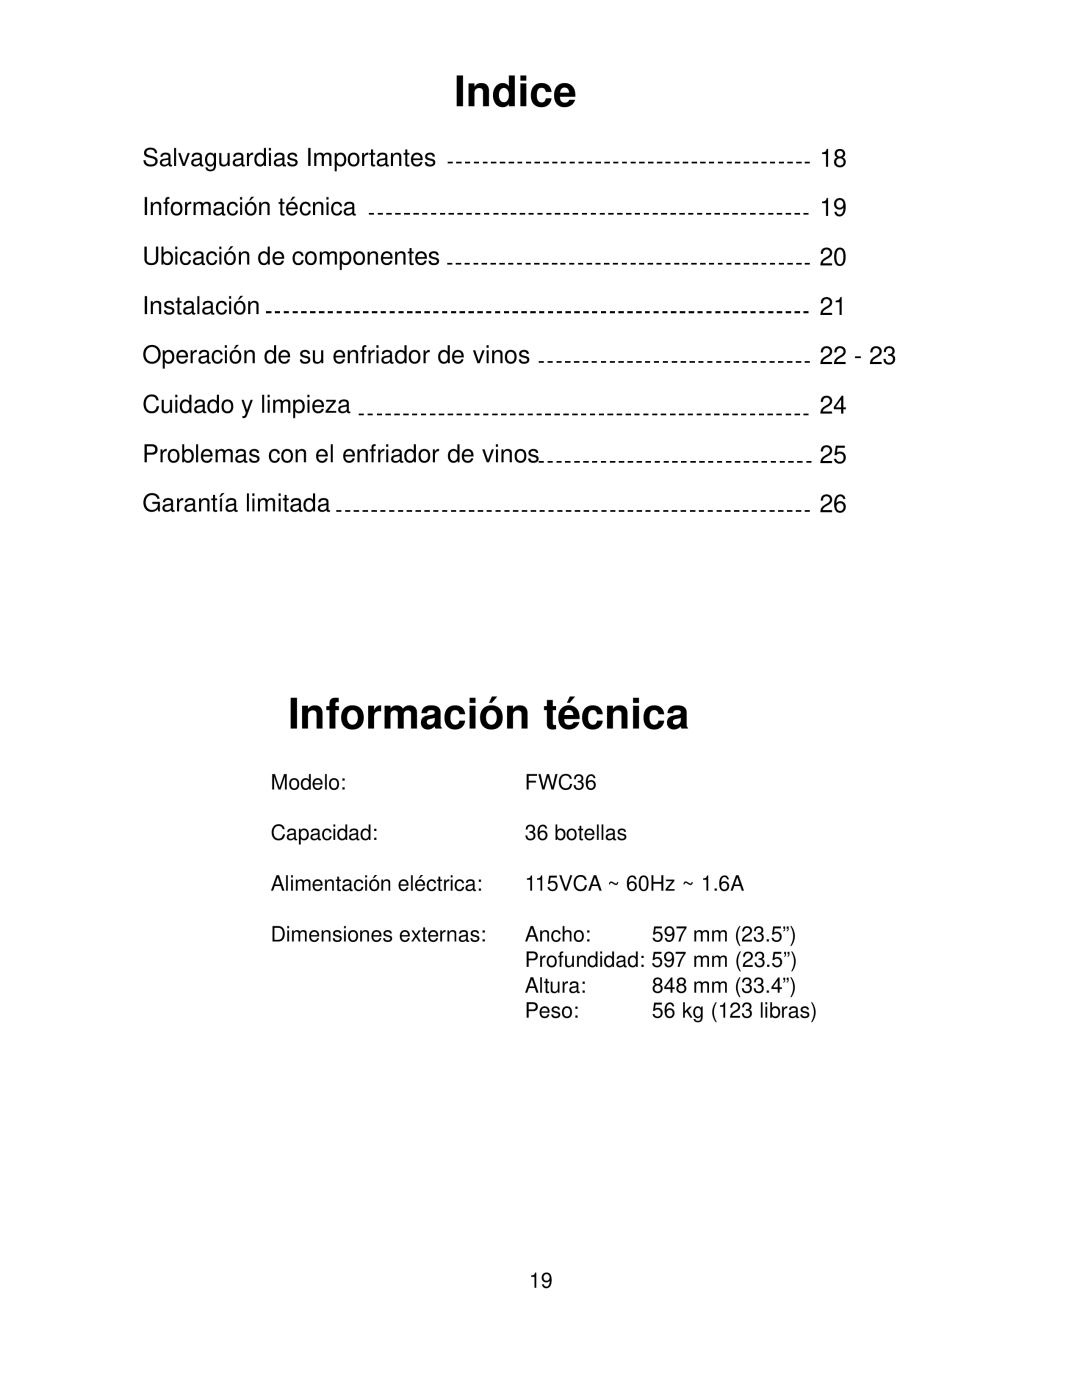 Franklin Industries, L.L.C FWC36 manual Indice, Información técnica 